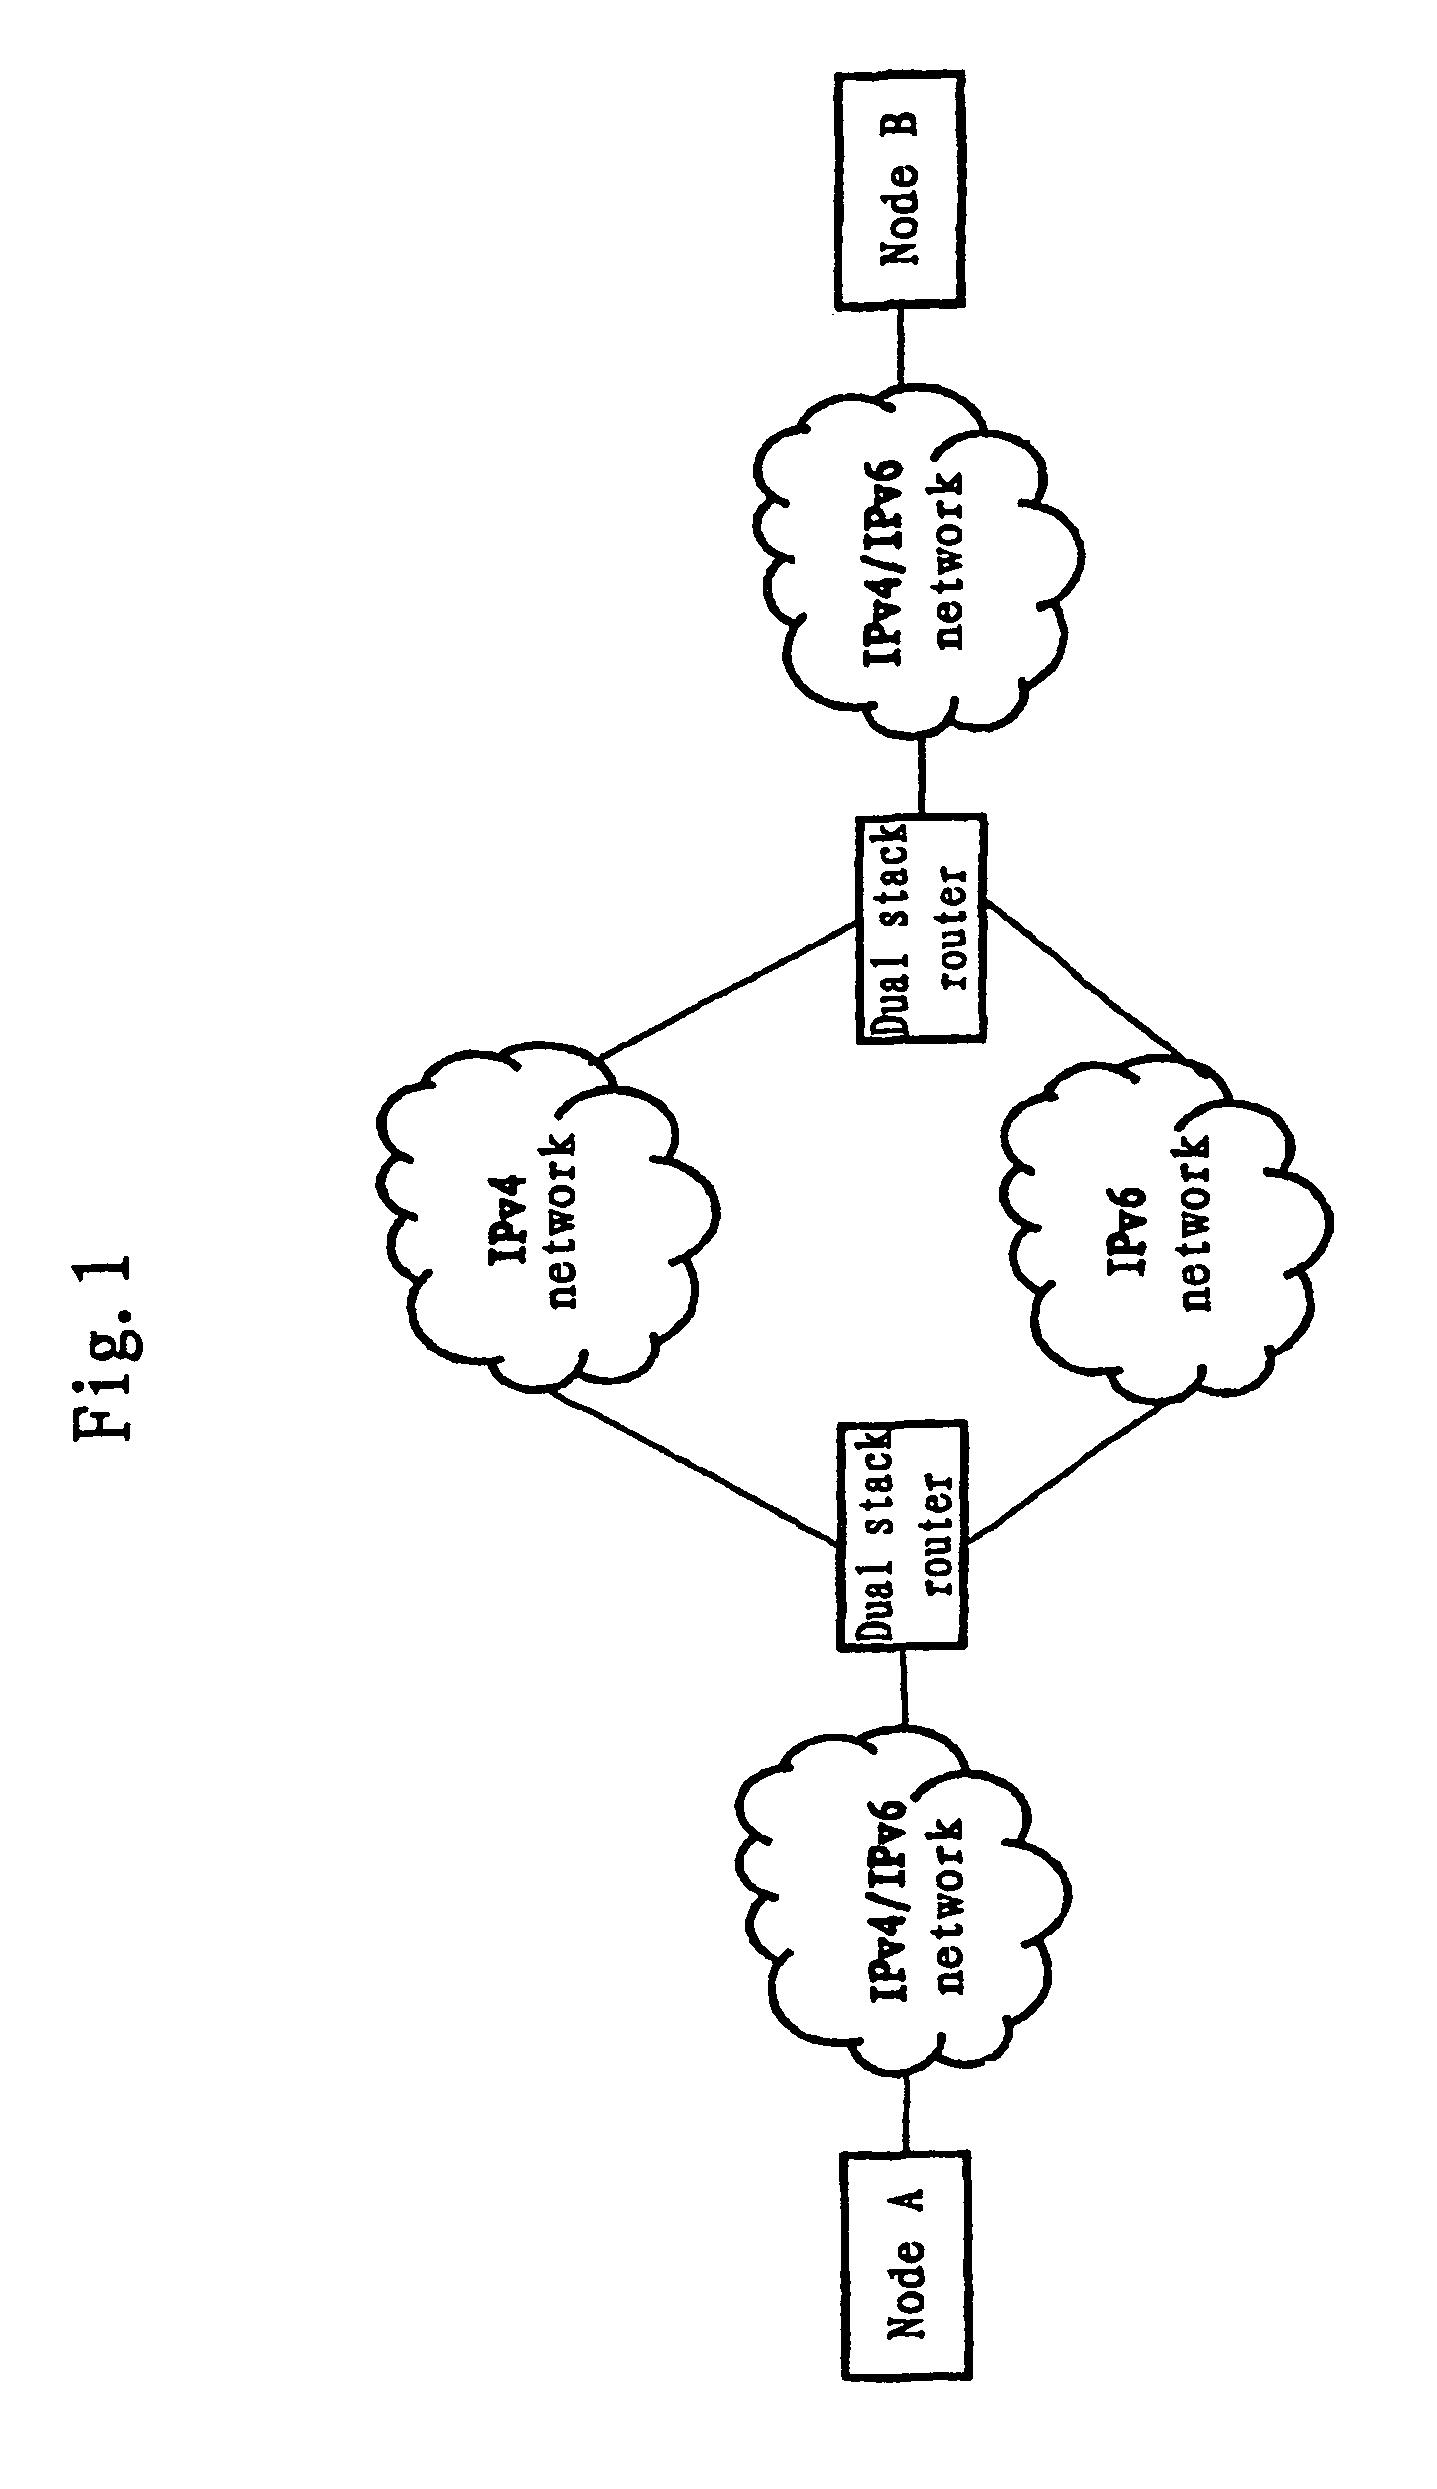 Traffic balancing apparatus and method, and network forwarding apparatus and method using the same